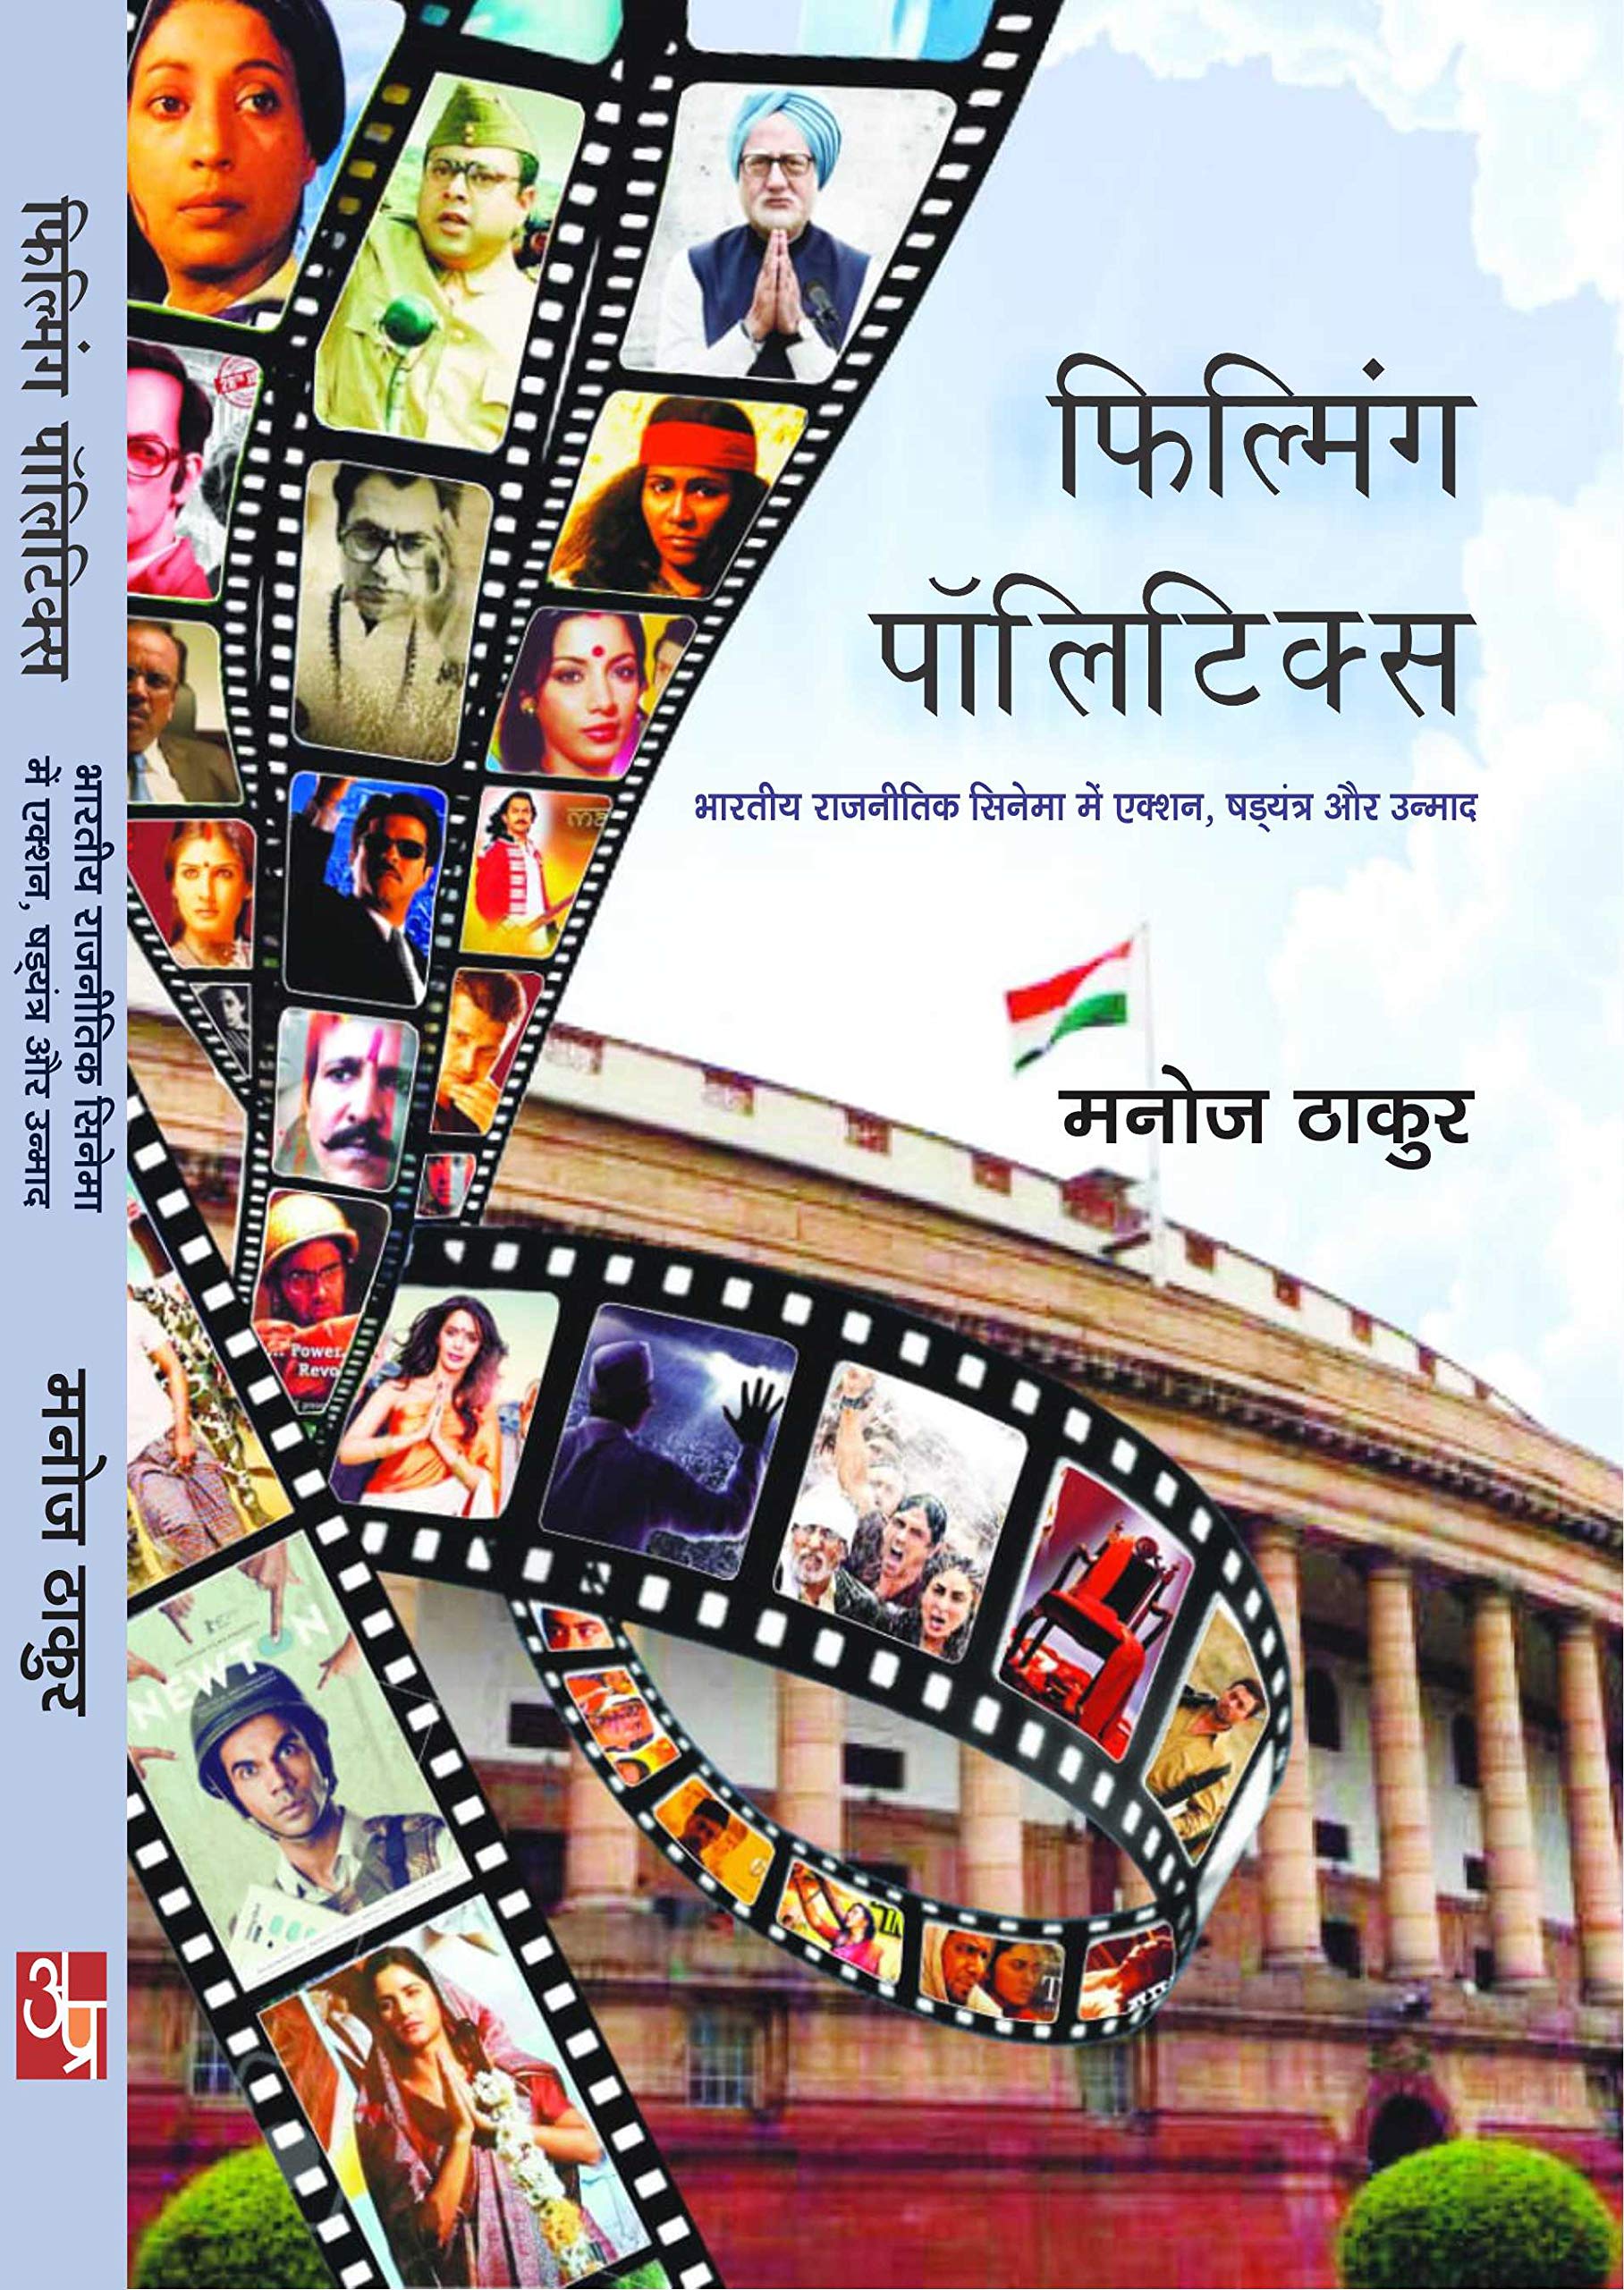 Filming Politics: Bharatiye Rajnitik Cinema Me Action Shadyantra Aur Unmad